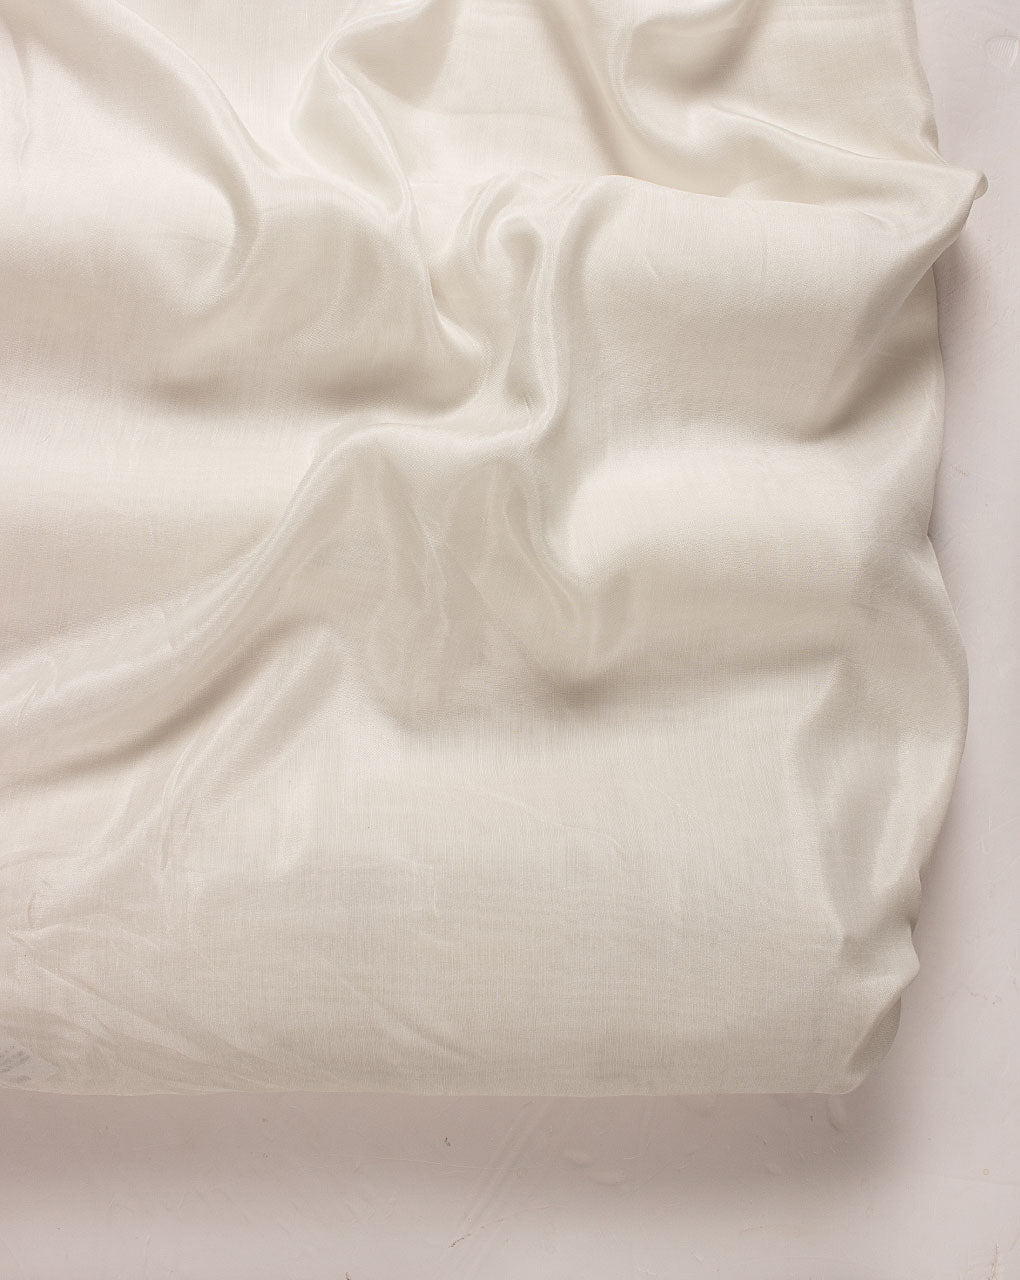 Dyeable Liva Excel Viscose ( Royal Silk ) Fabric - Fabriclore.com